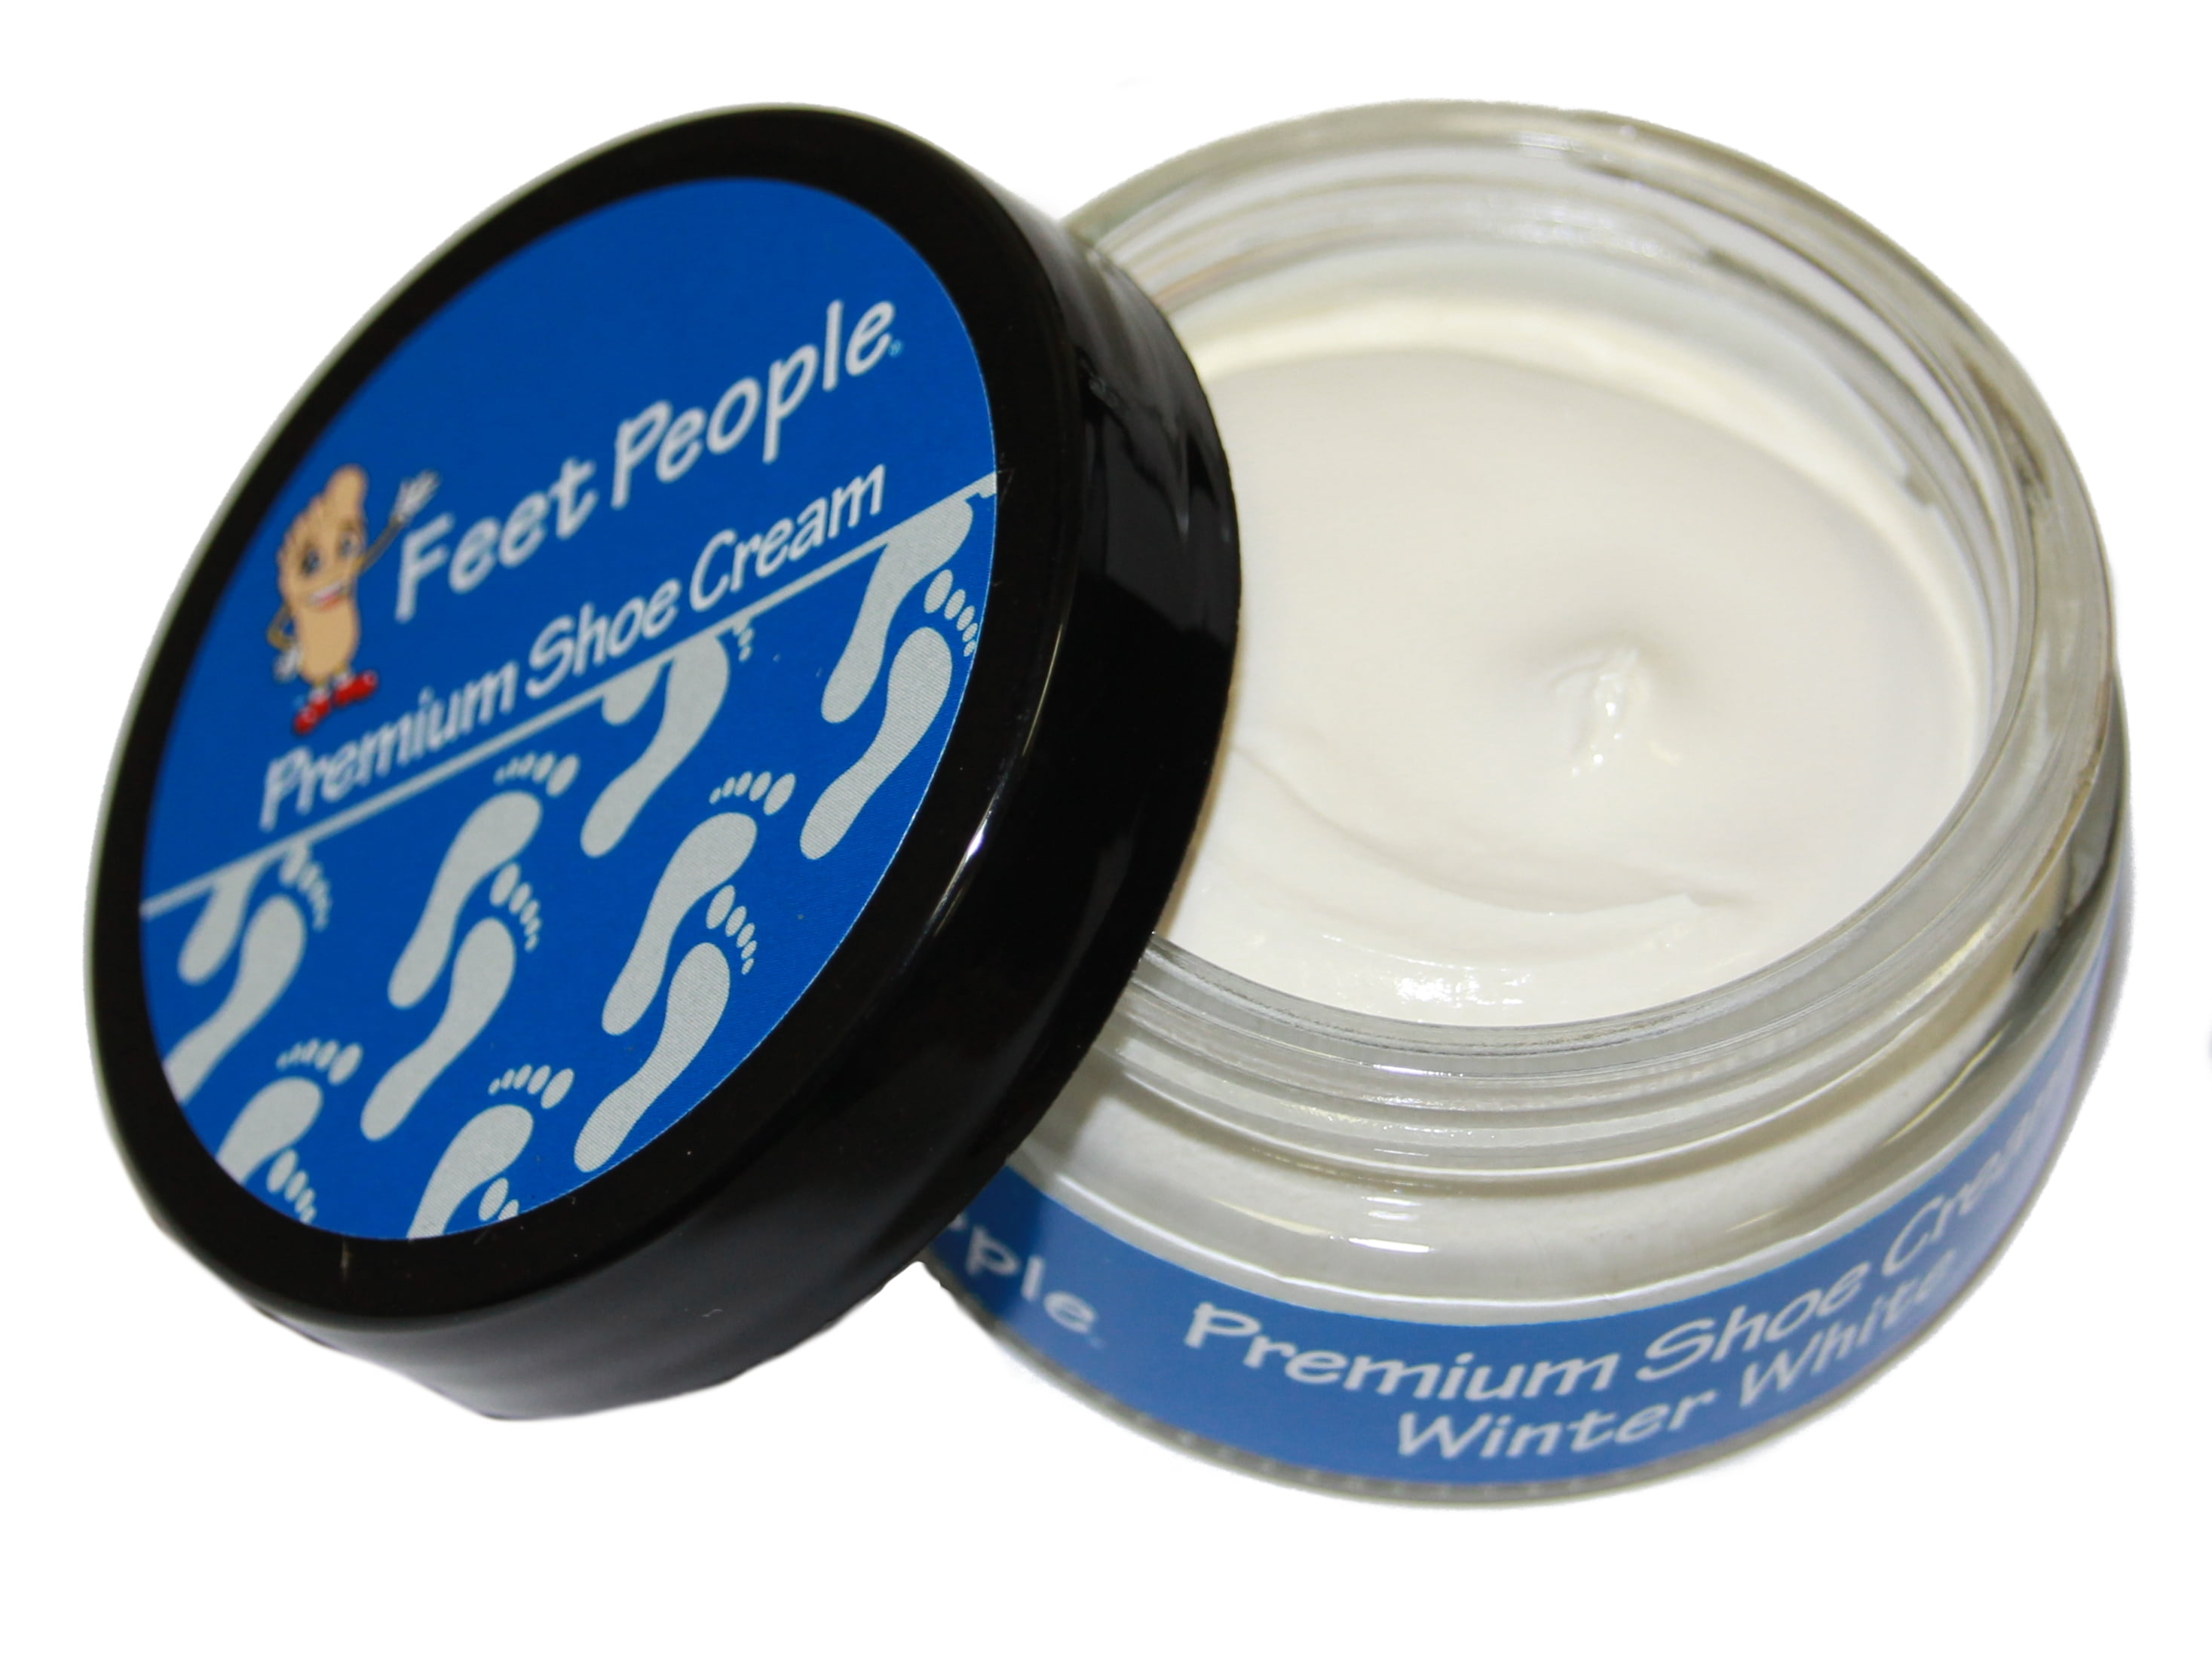 FeetPeople Premium Shoe Cream 1.5 Oz, 1 